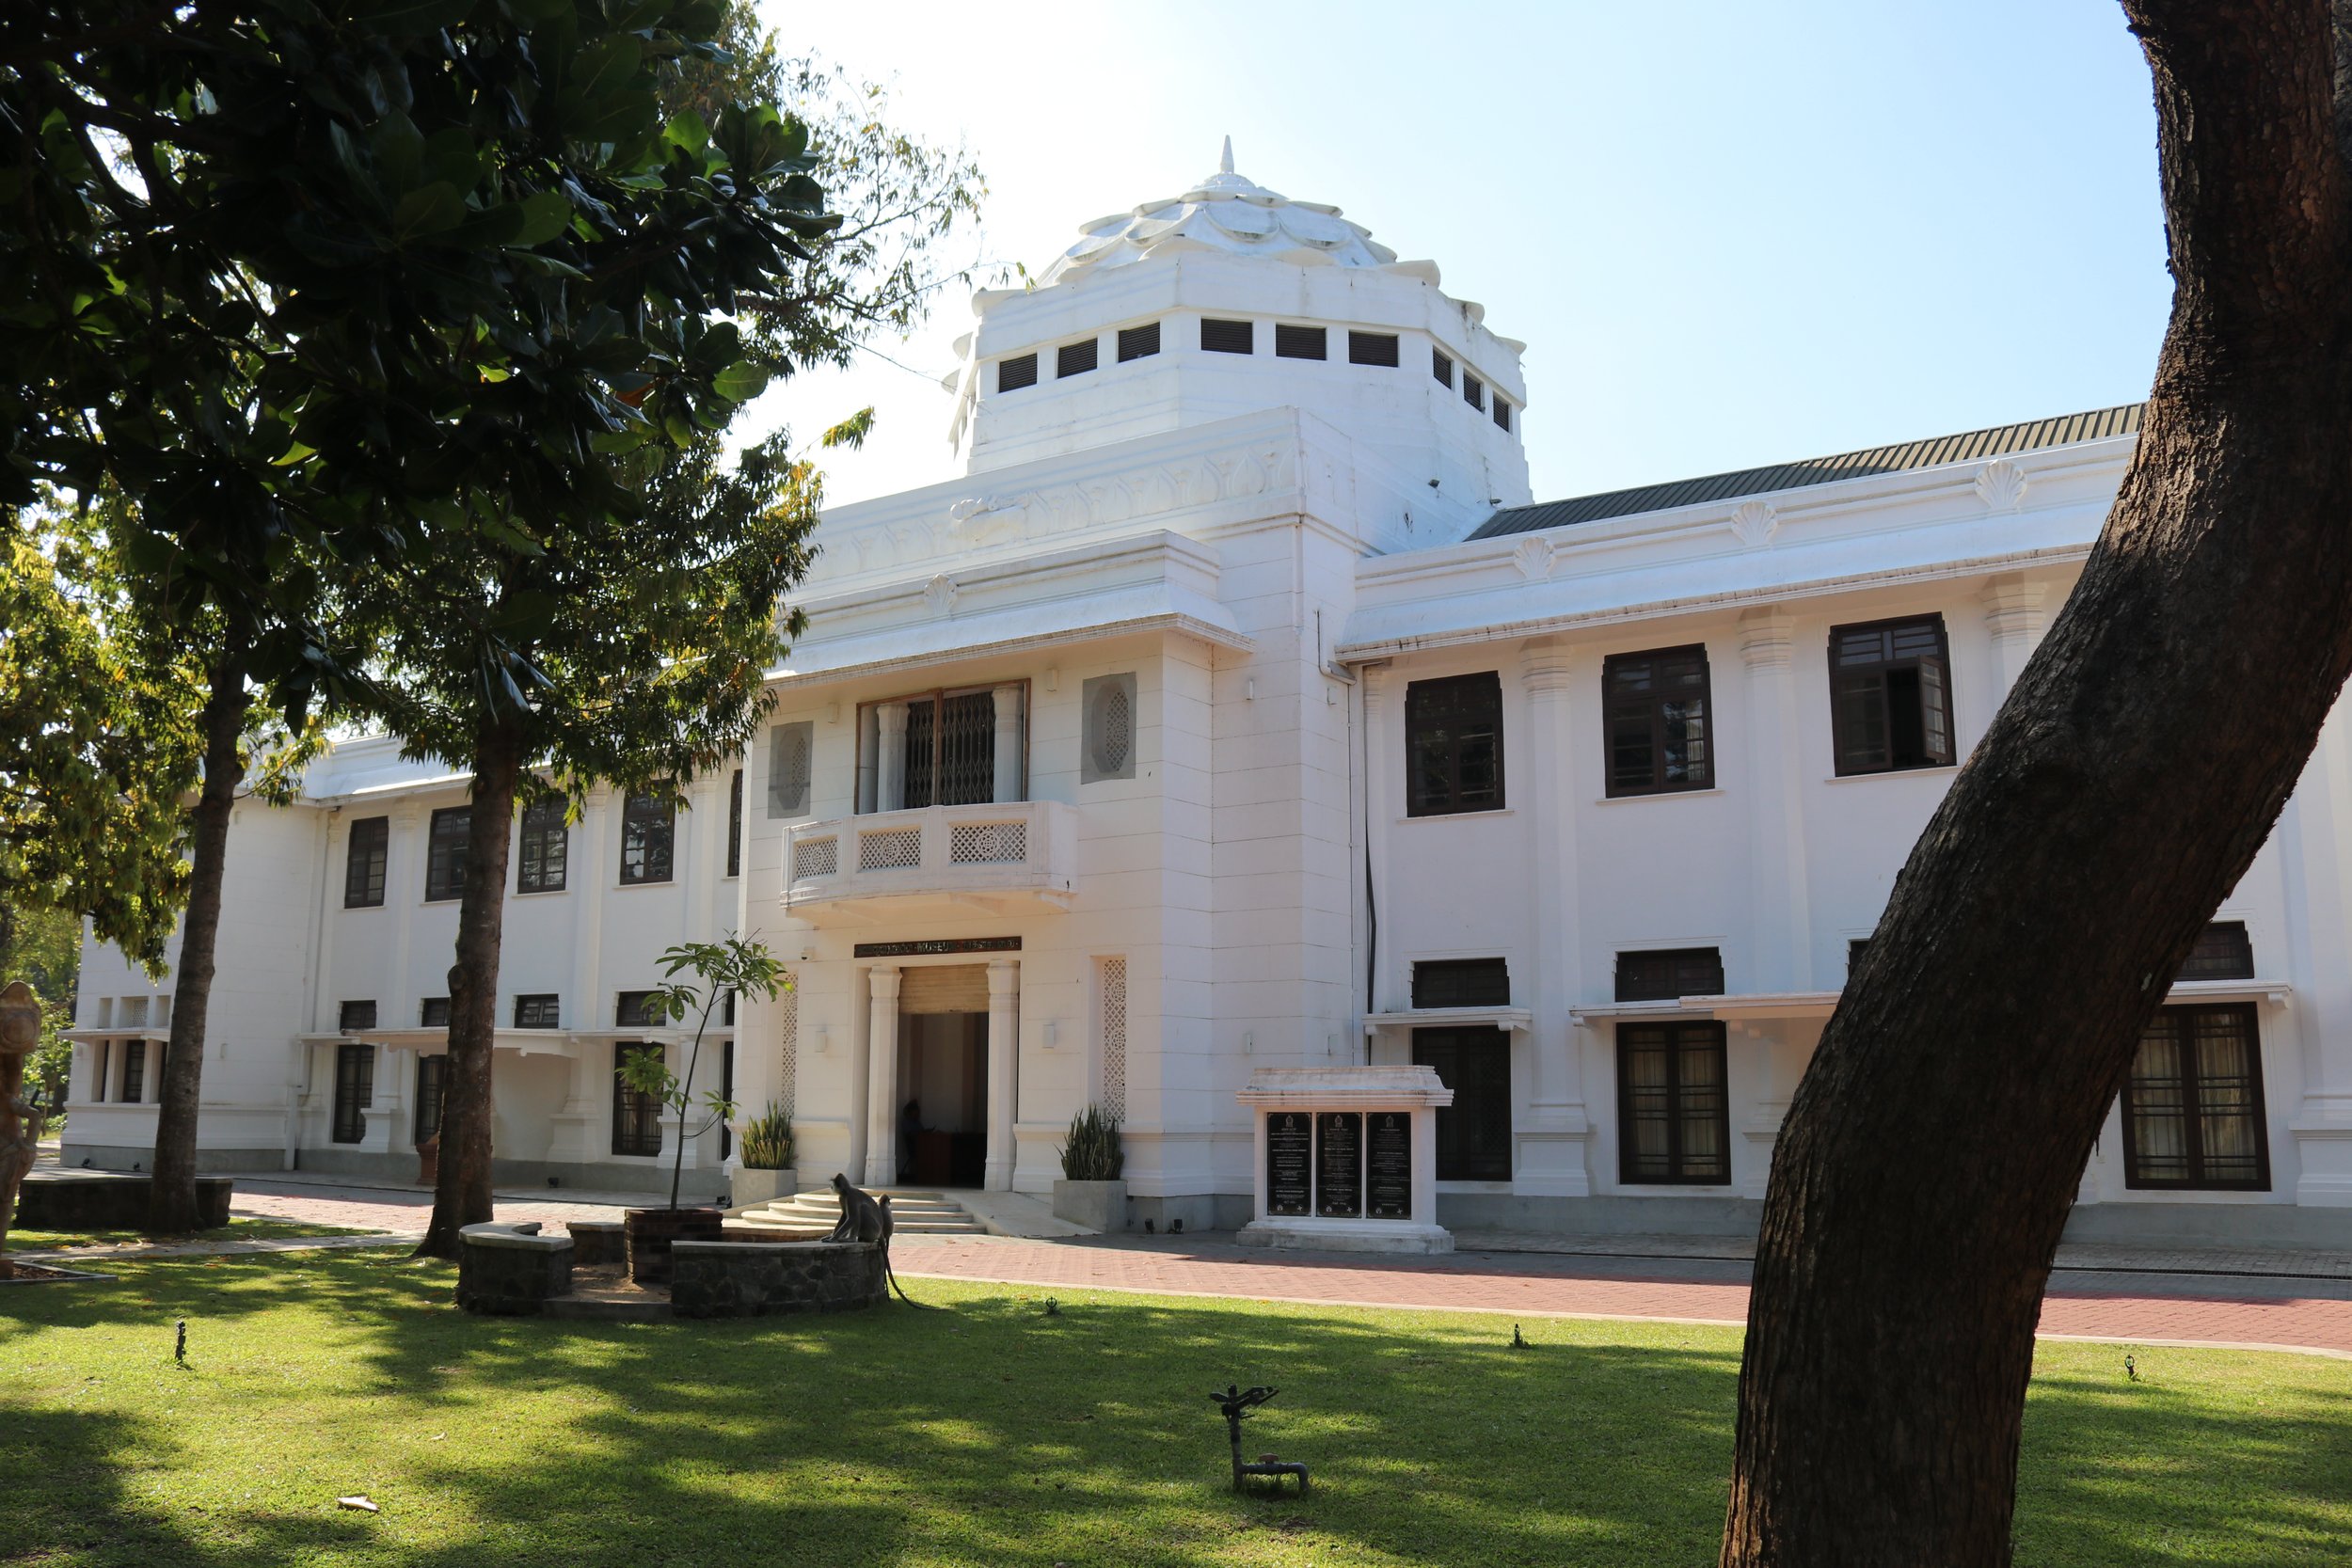 Jetavanaramaya Stupa and Museum